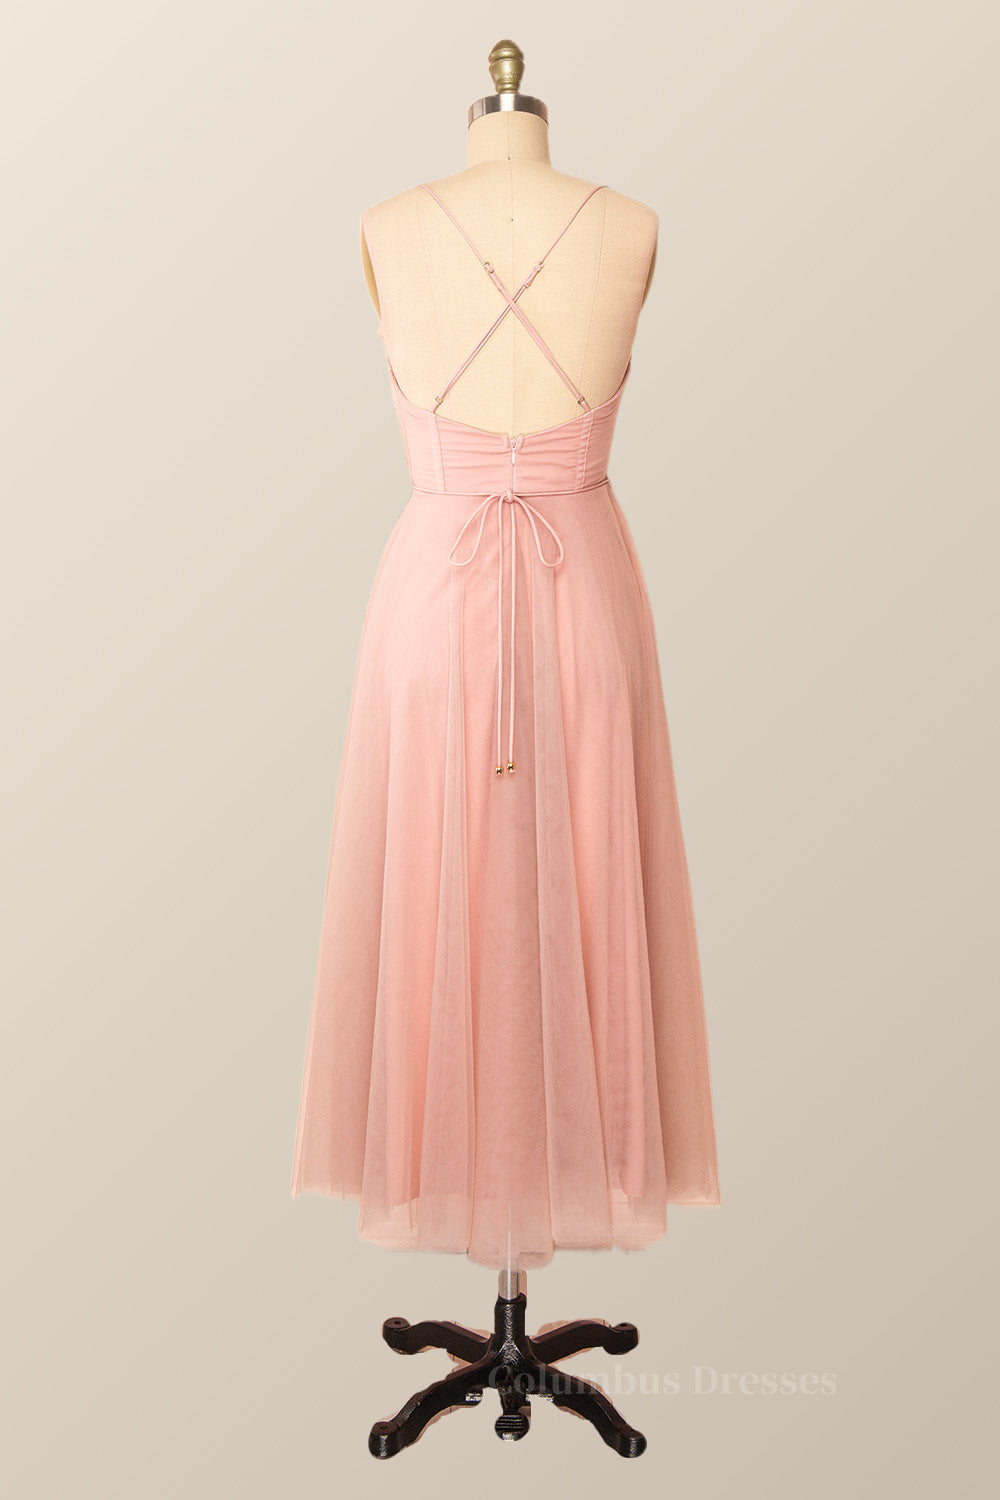 Club Dress, Spaghetti Straps Blush Pink Tulle A-line Midi Dress